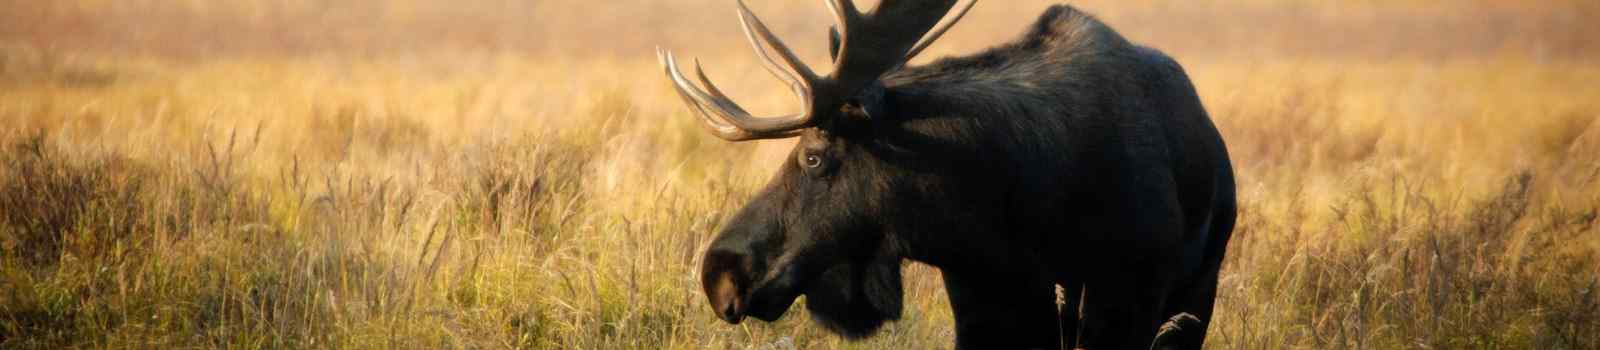 PARKS-WEST Wild Bull Moose in autumn  Spray Valley Provincial Park in Kananaskis Country Alberta Canada shutterstock 63128905